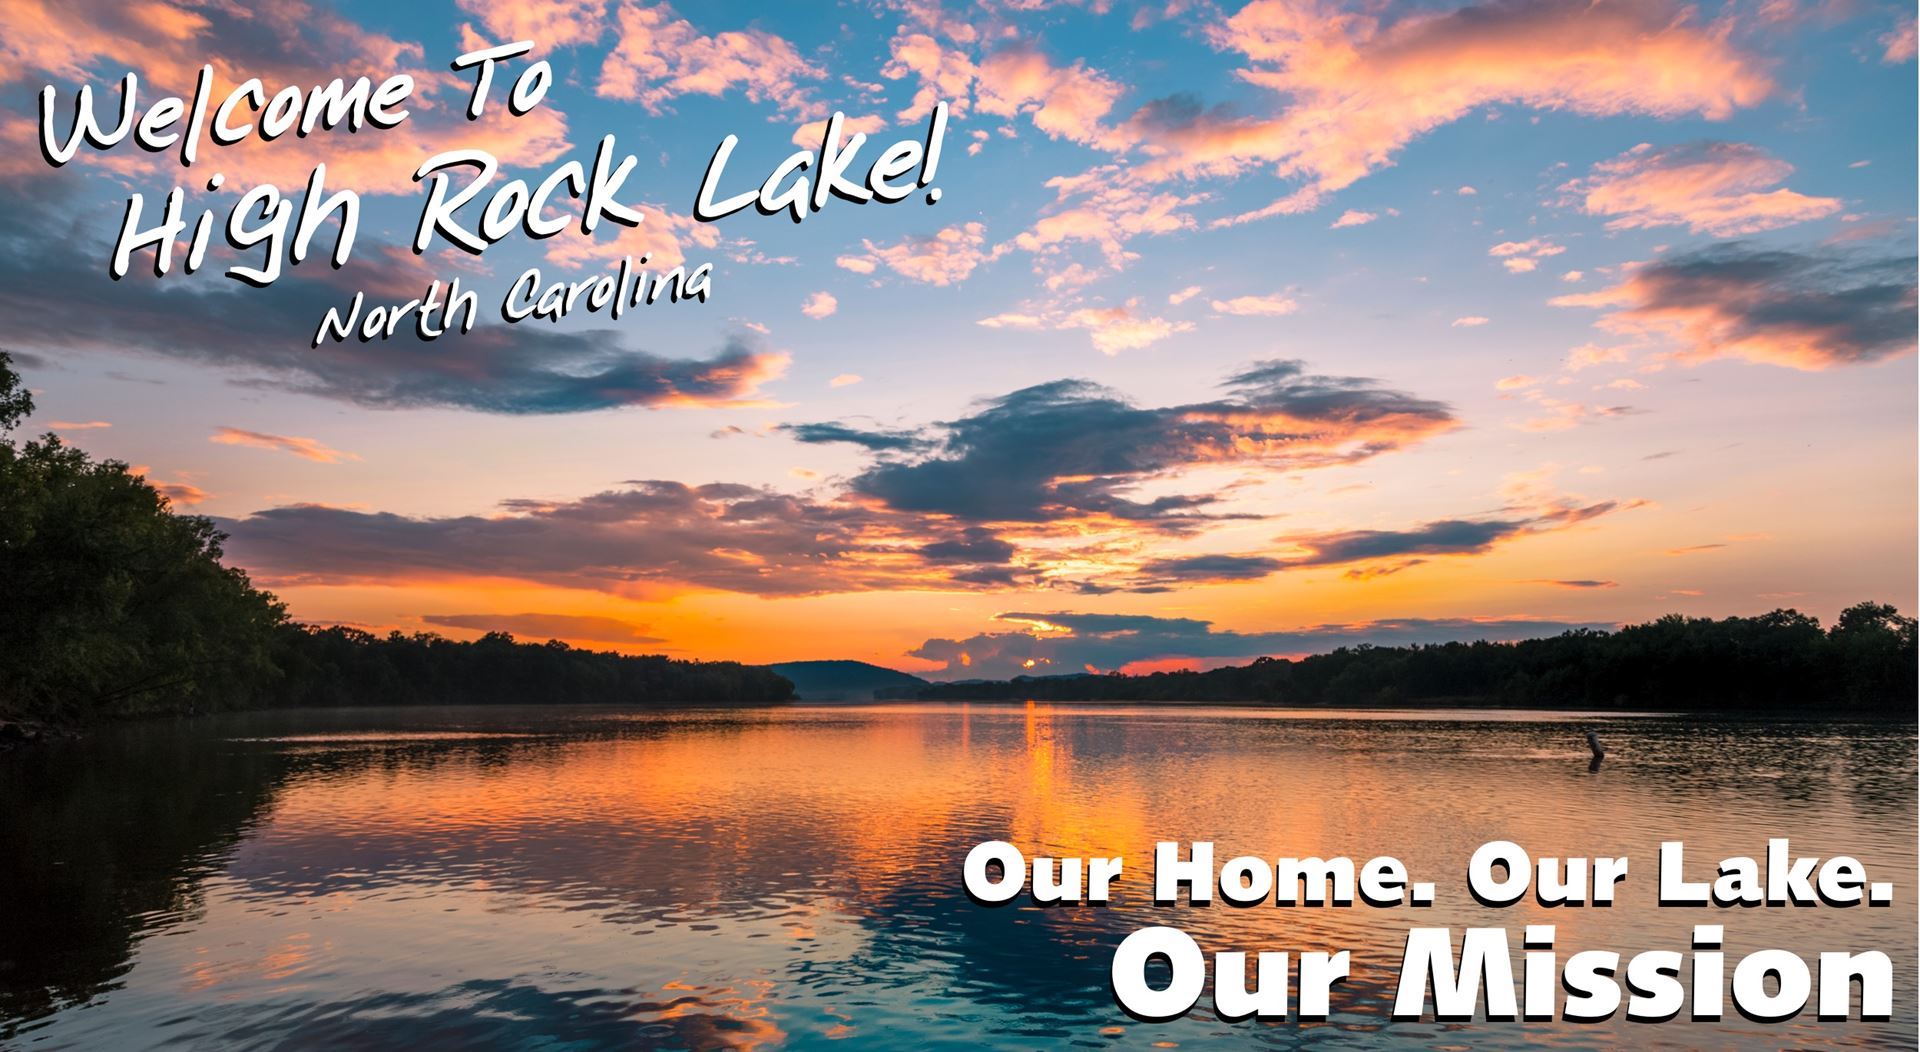 Welcome to High Rock Lake, North Carolina!